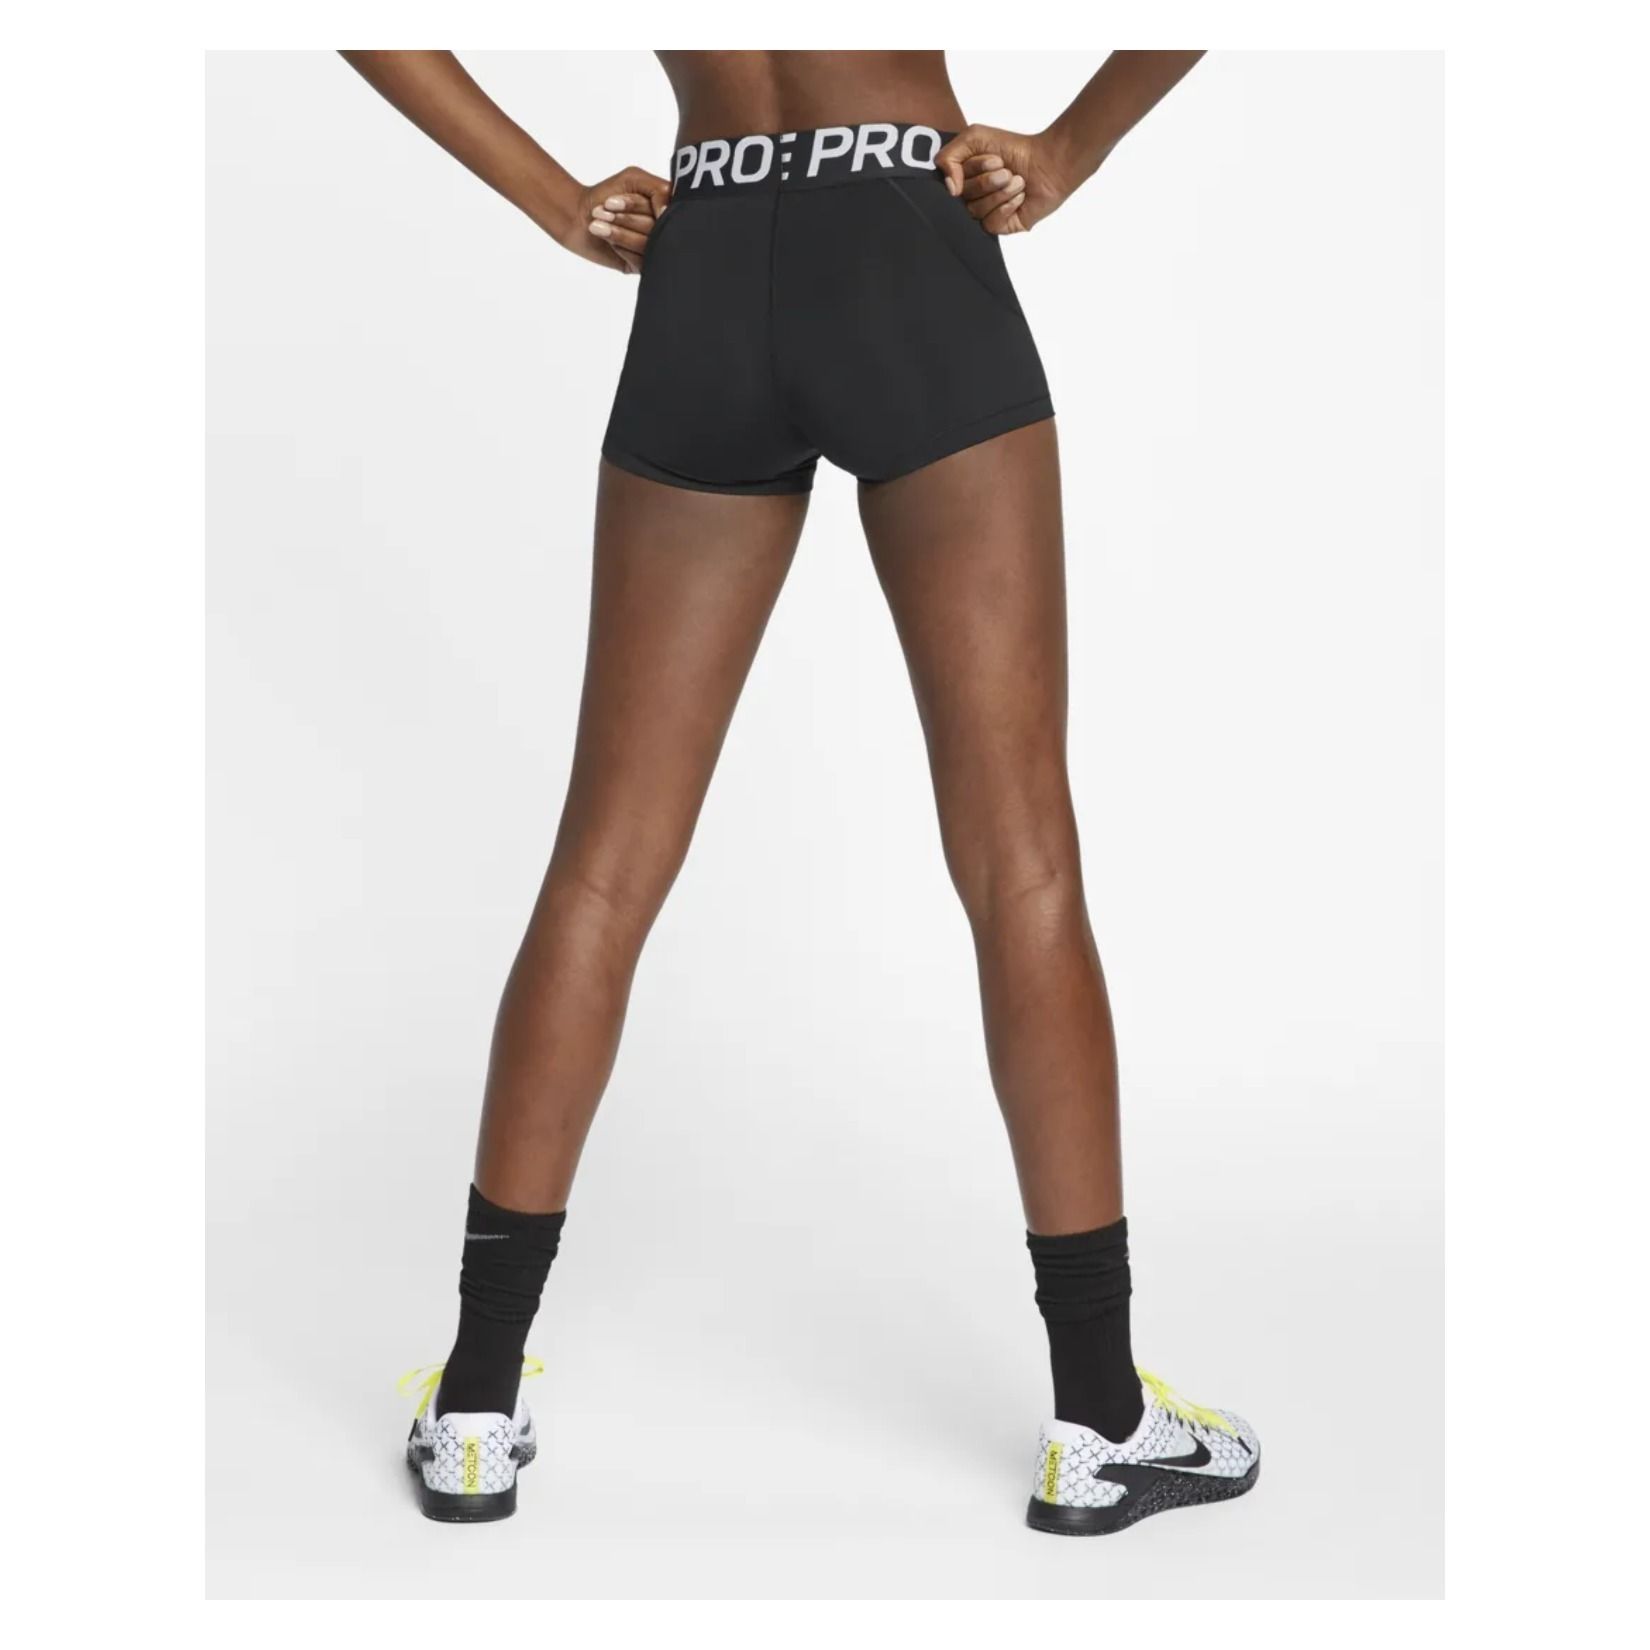 Nike Womens 3 Inch Pro Training Shorts - Kitlocker.com